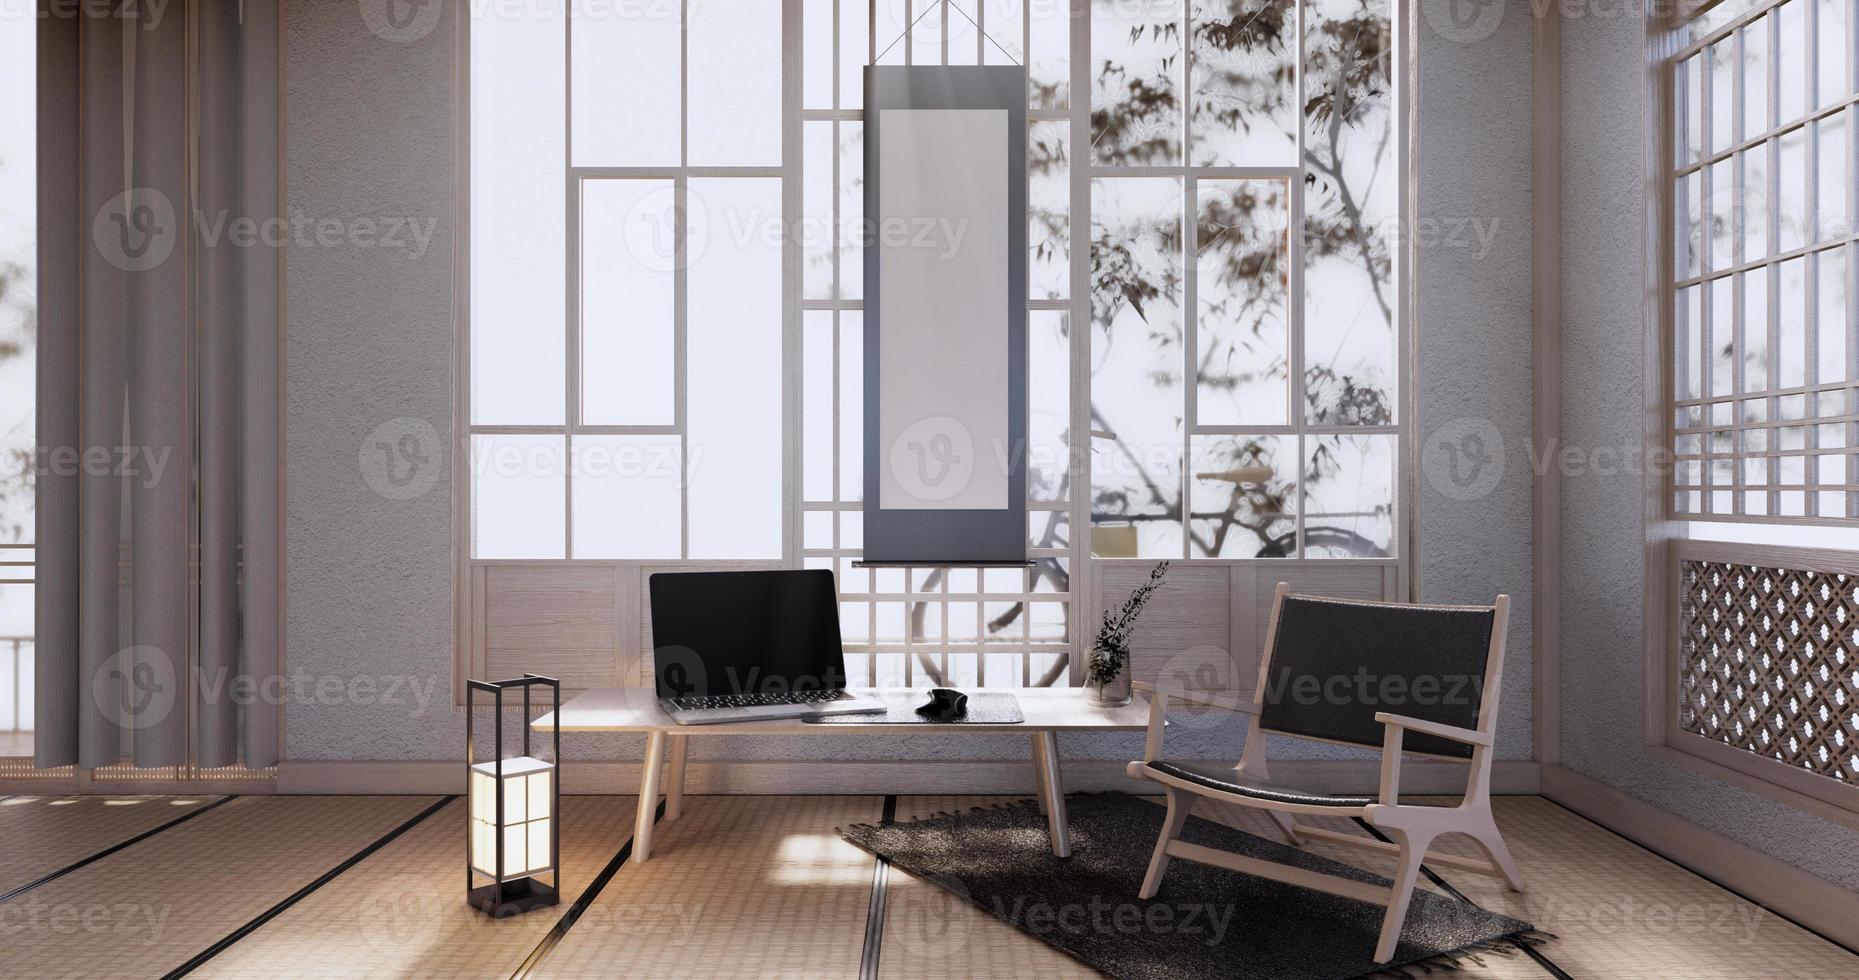 kast houten display-ontwerp op kamer Japanse minimalistische woonkamer unterior, 3D-rendering foto